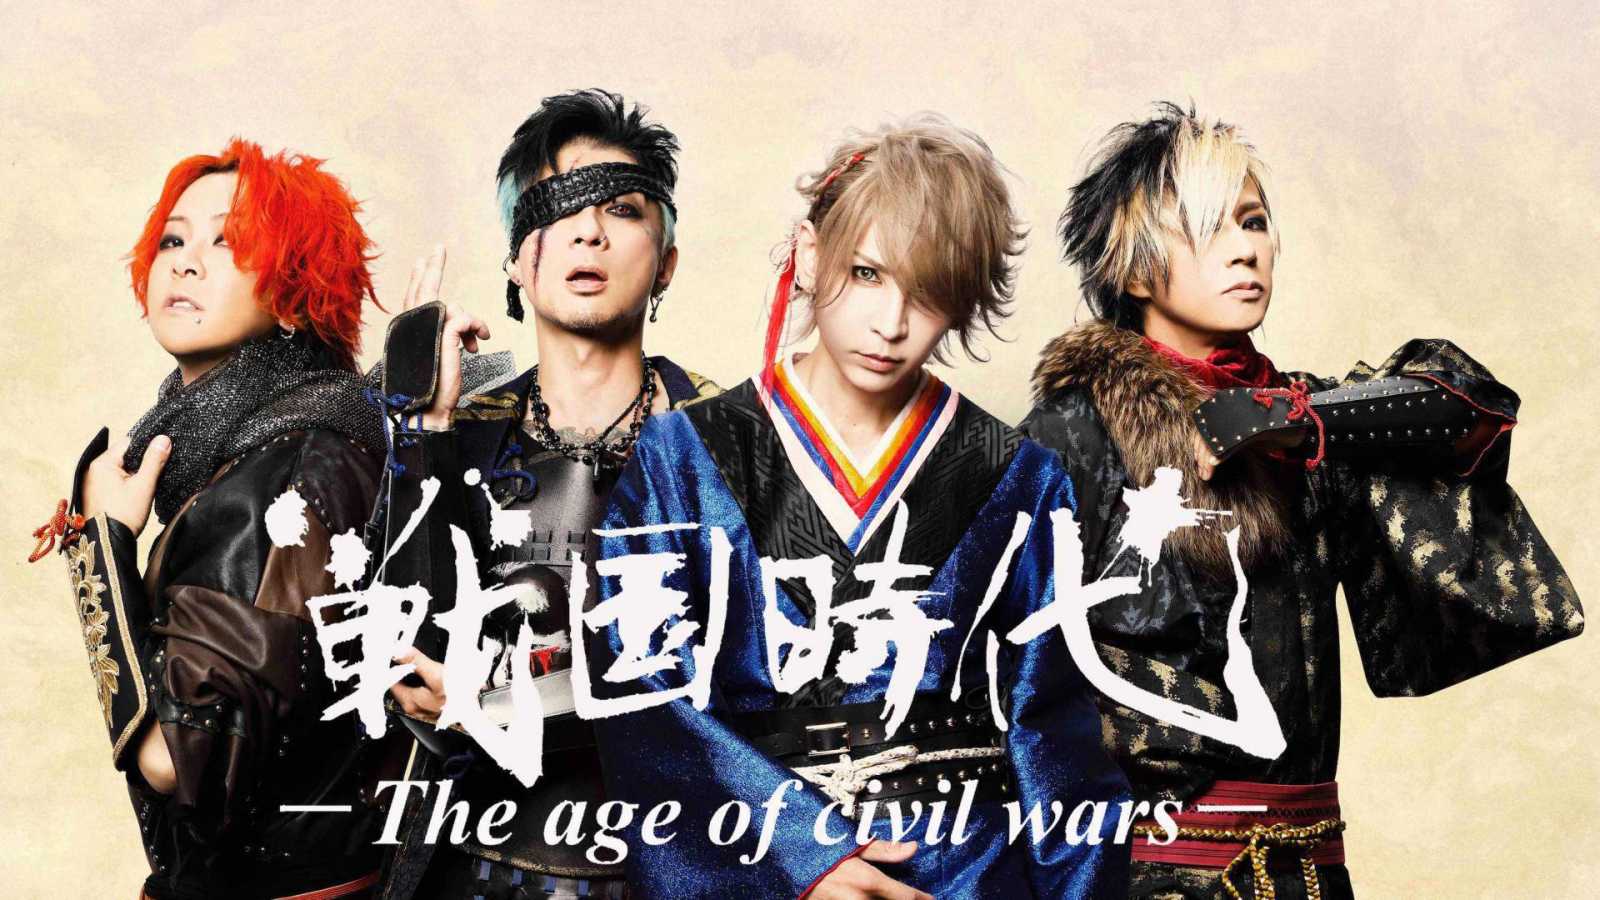 Sengoku jidai -The age of civil wars-  ogłasza transmisję koncertu © Sengoku jidai -The age of civil wars-. All rights reserved.